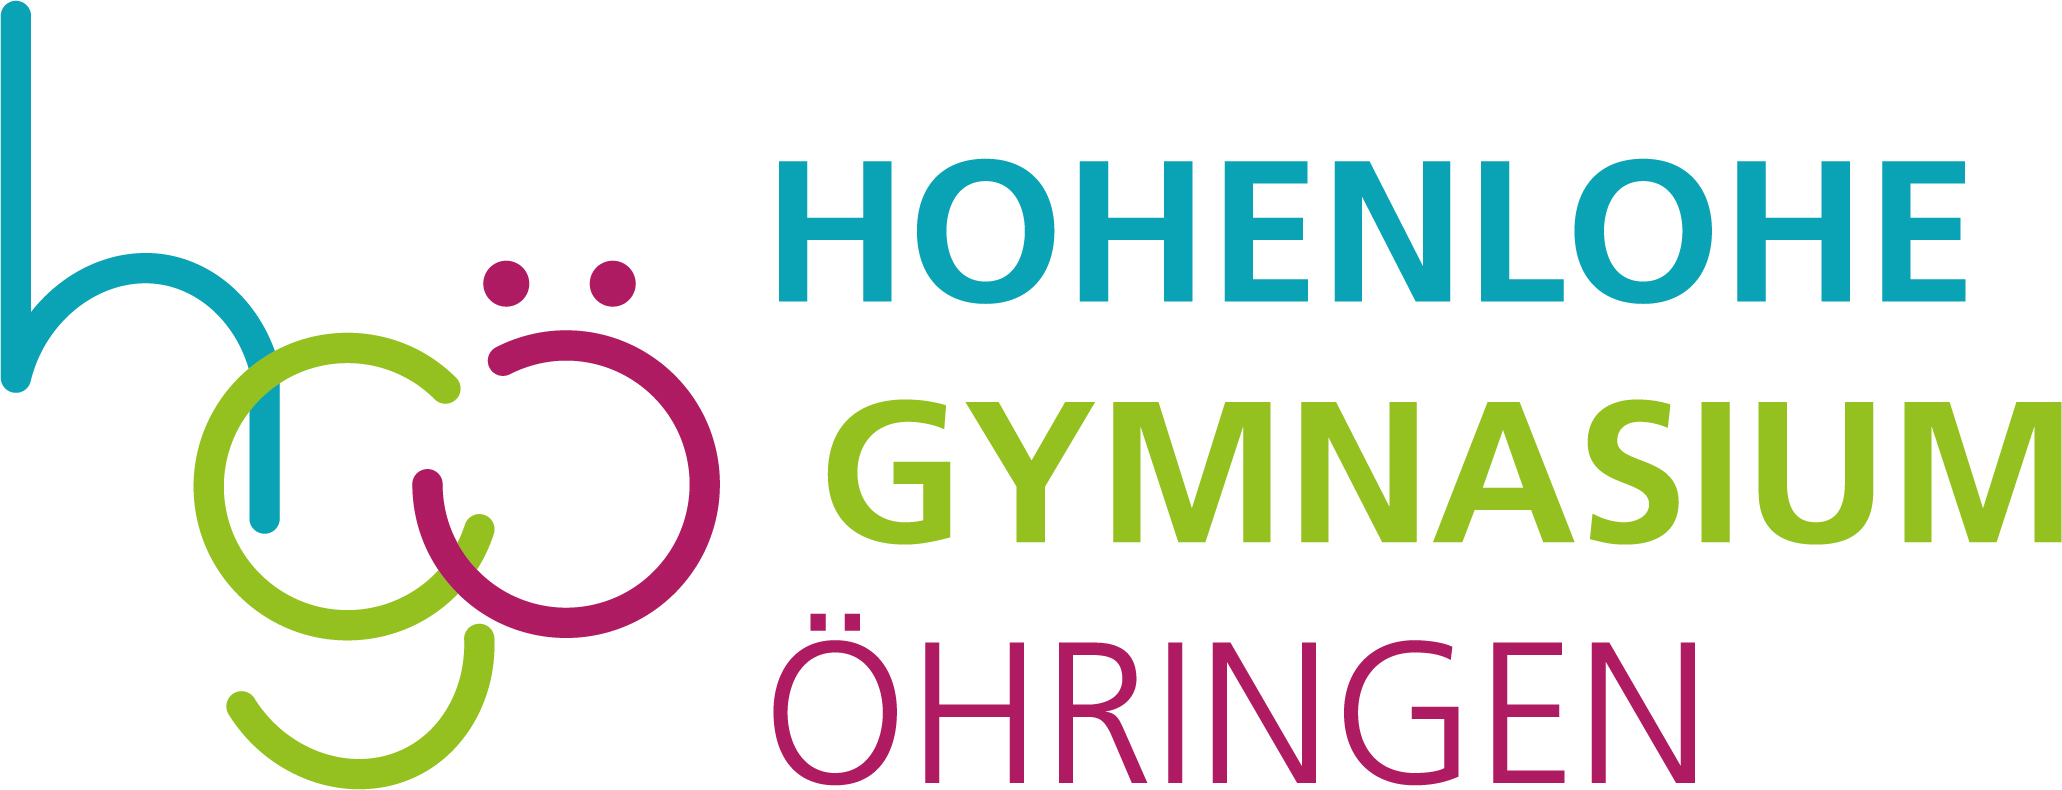 Hohenlohe-Gymnasium Öhringen